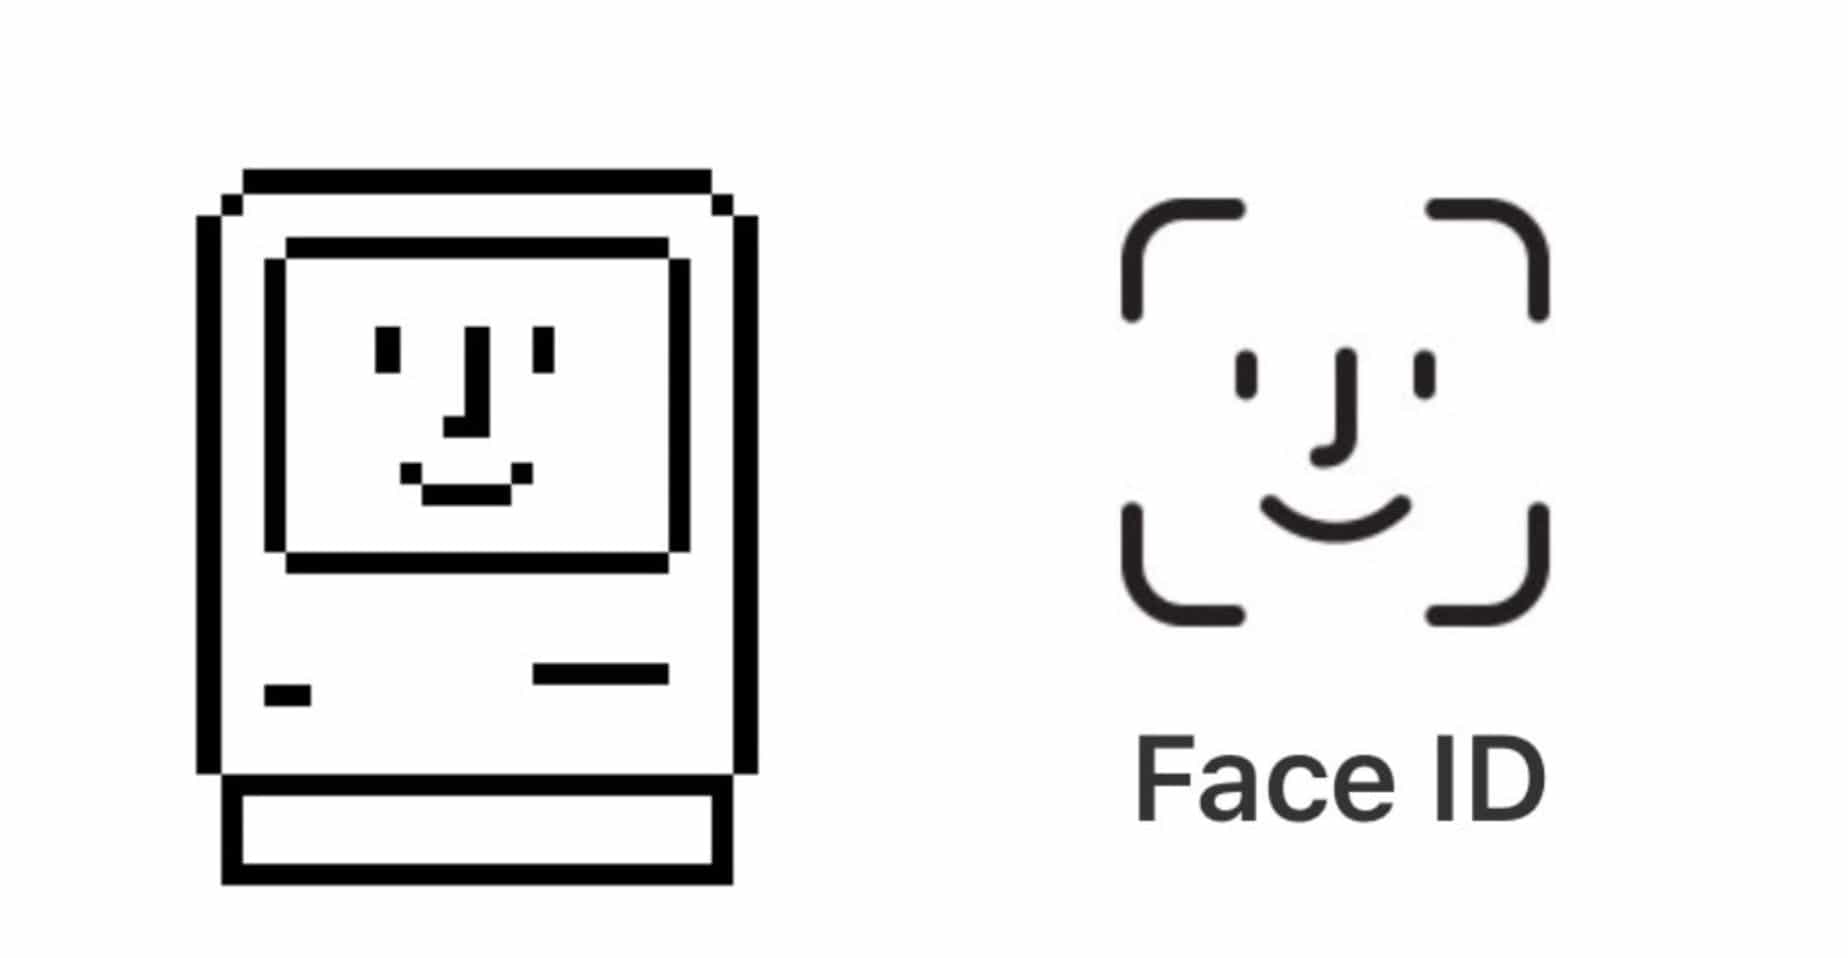 Old Mac Logo - Face ID logo resurrects a classic Macintosh icon | Cult of Mac